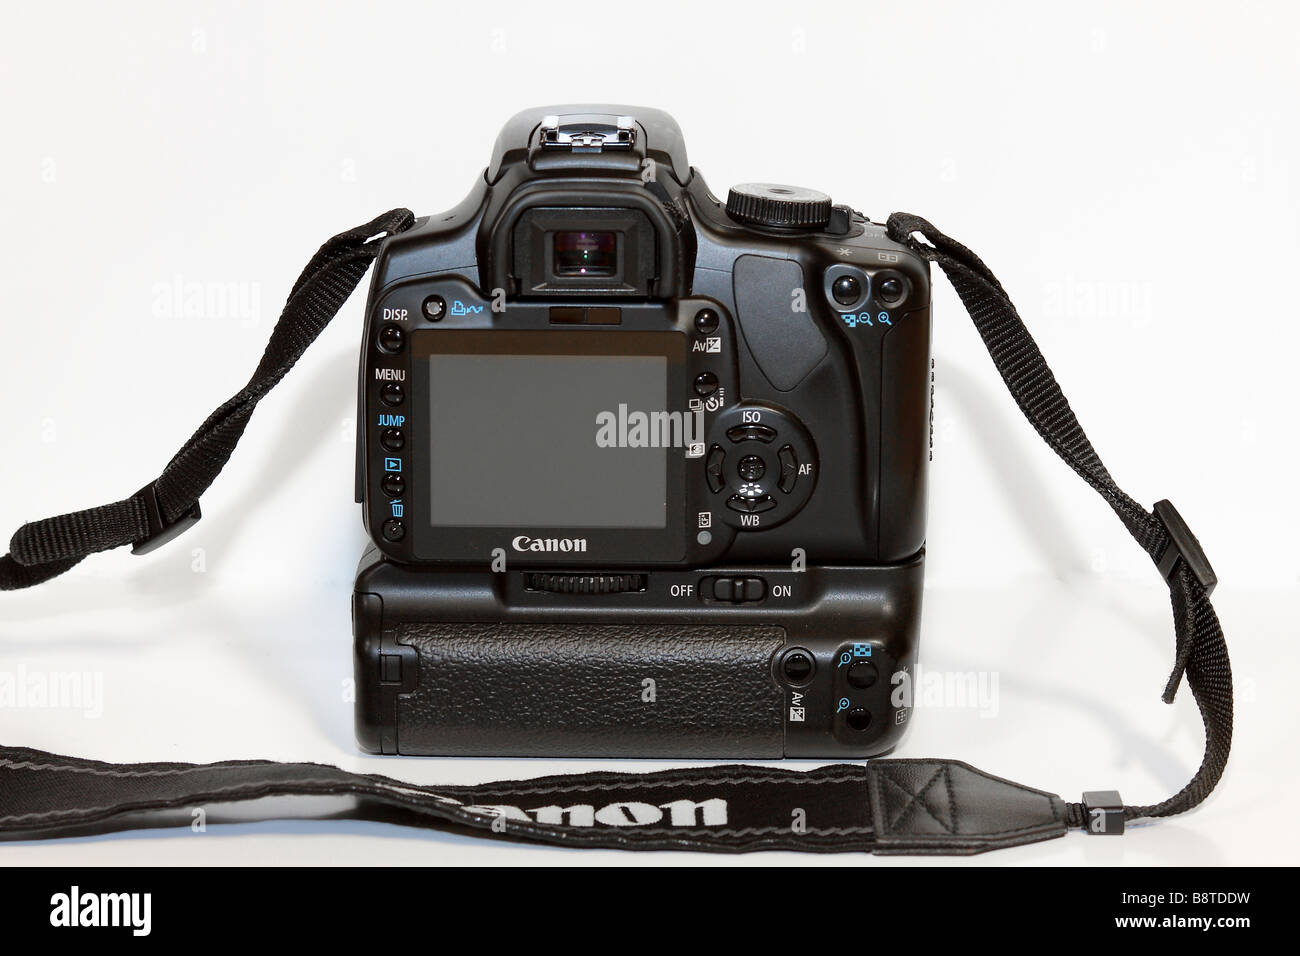 Canon Camera Kiss X, BG-E3 Battery grip, 50mm lens 'Side View' Stock Photo